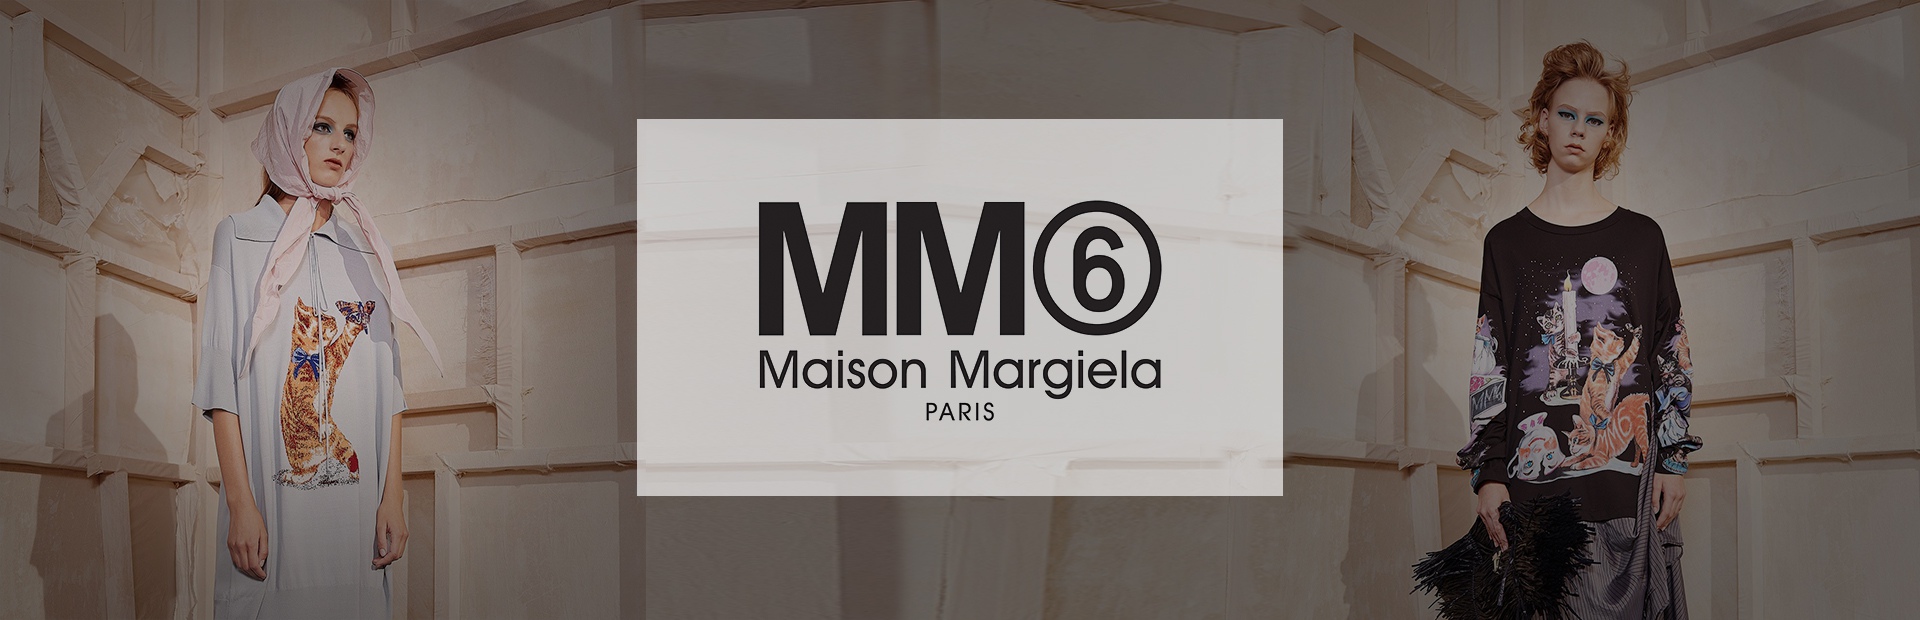 ММ6 Maison Margiela